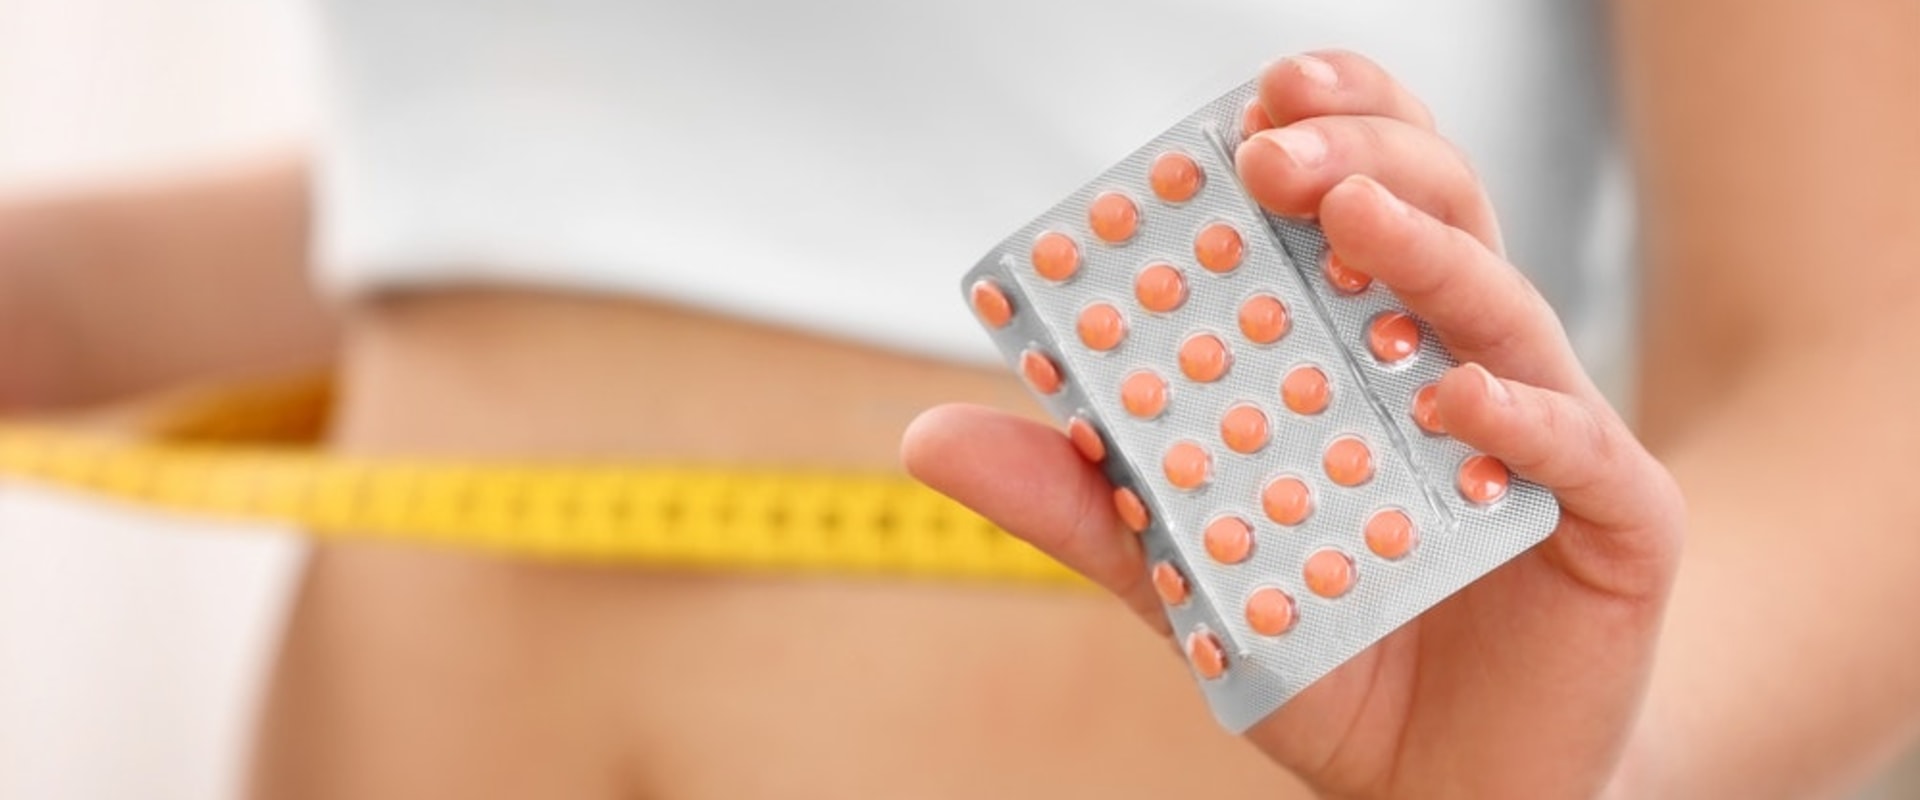 Do Weight Loss Pills Really Work?